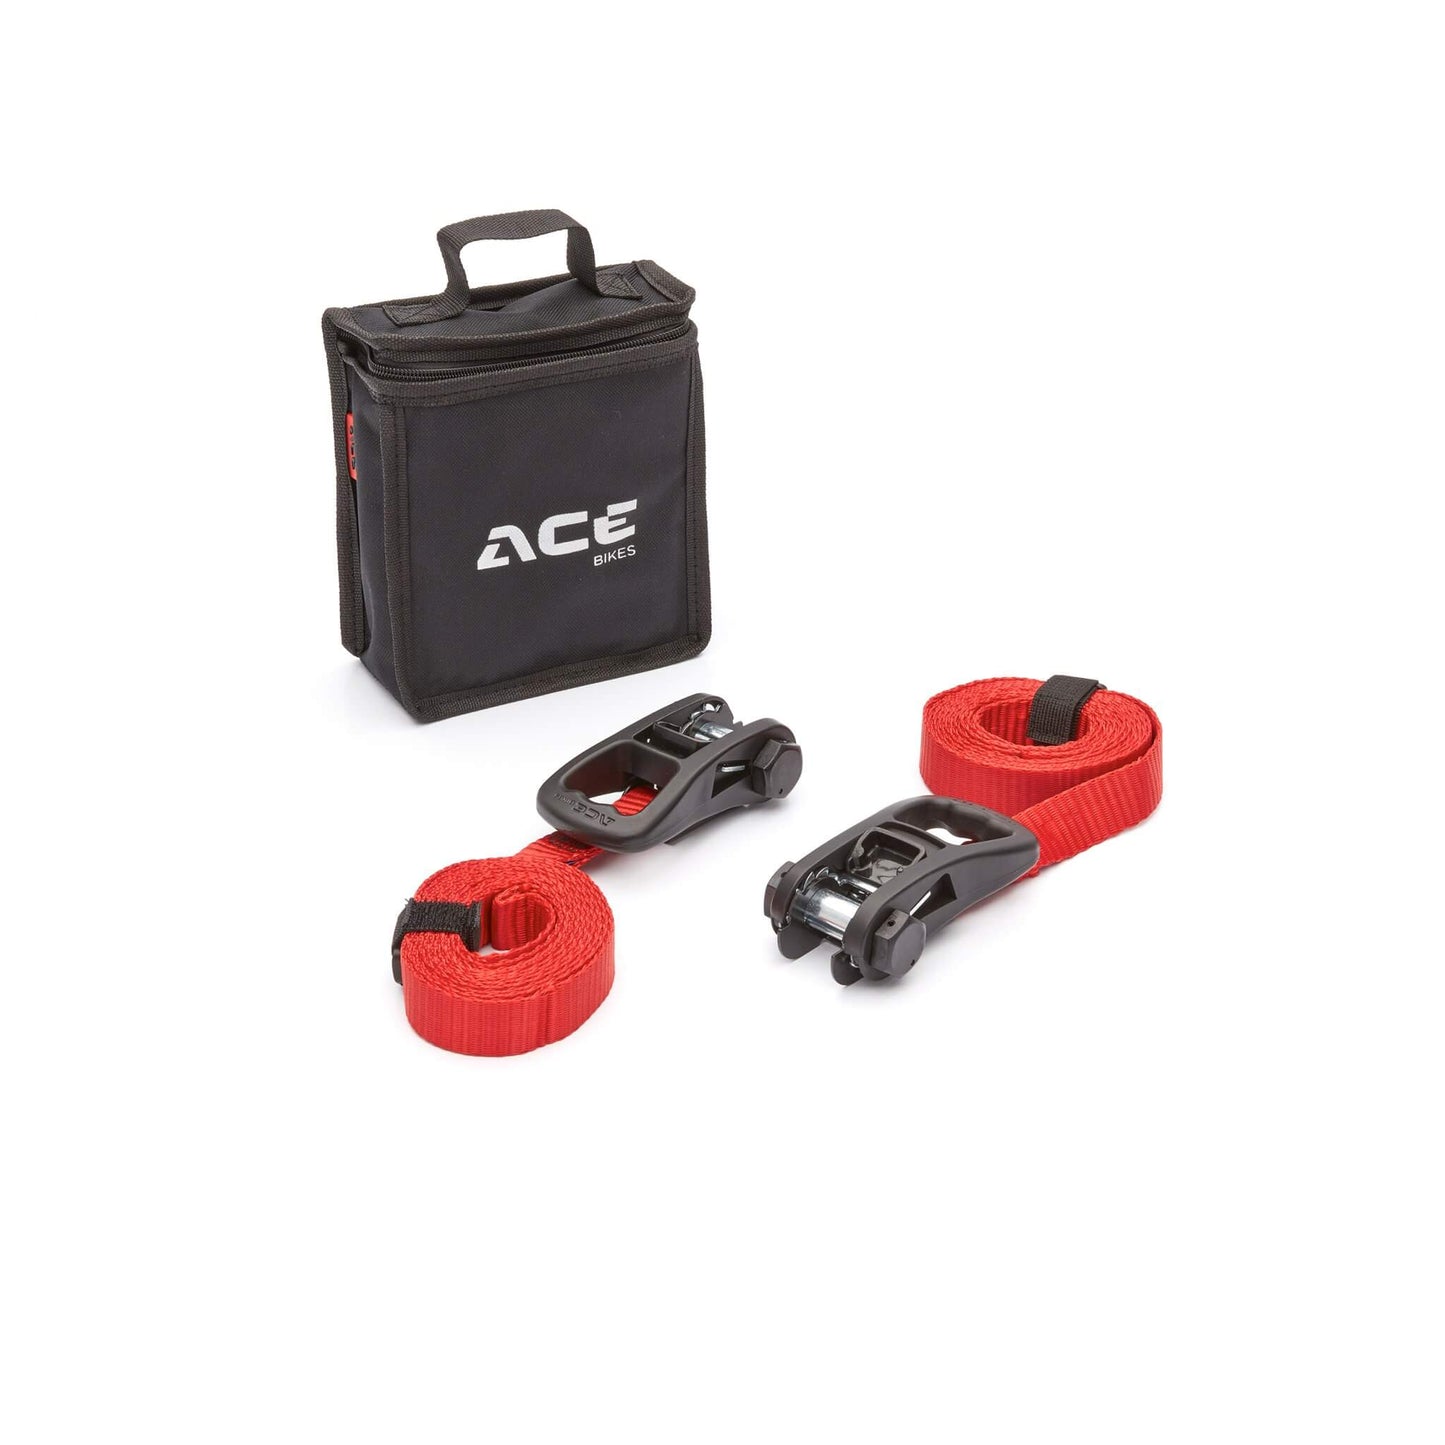 Acebikes Rachet Essential 2-pack